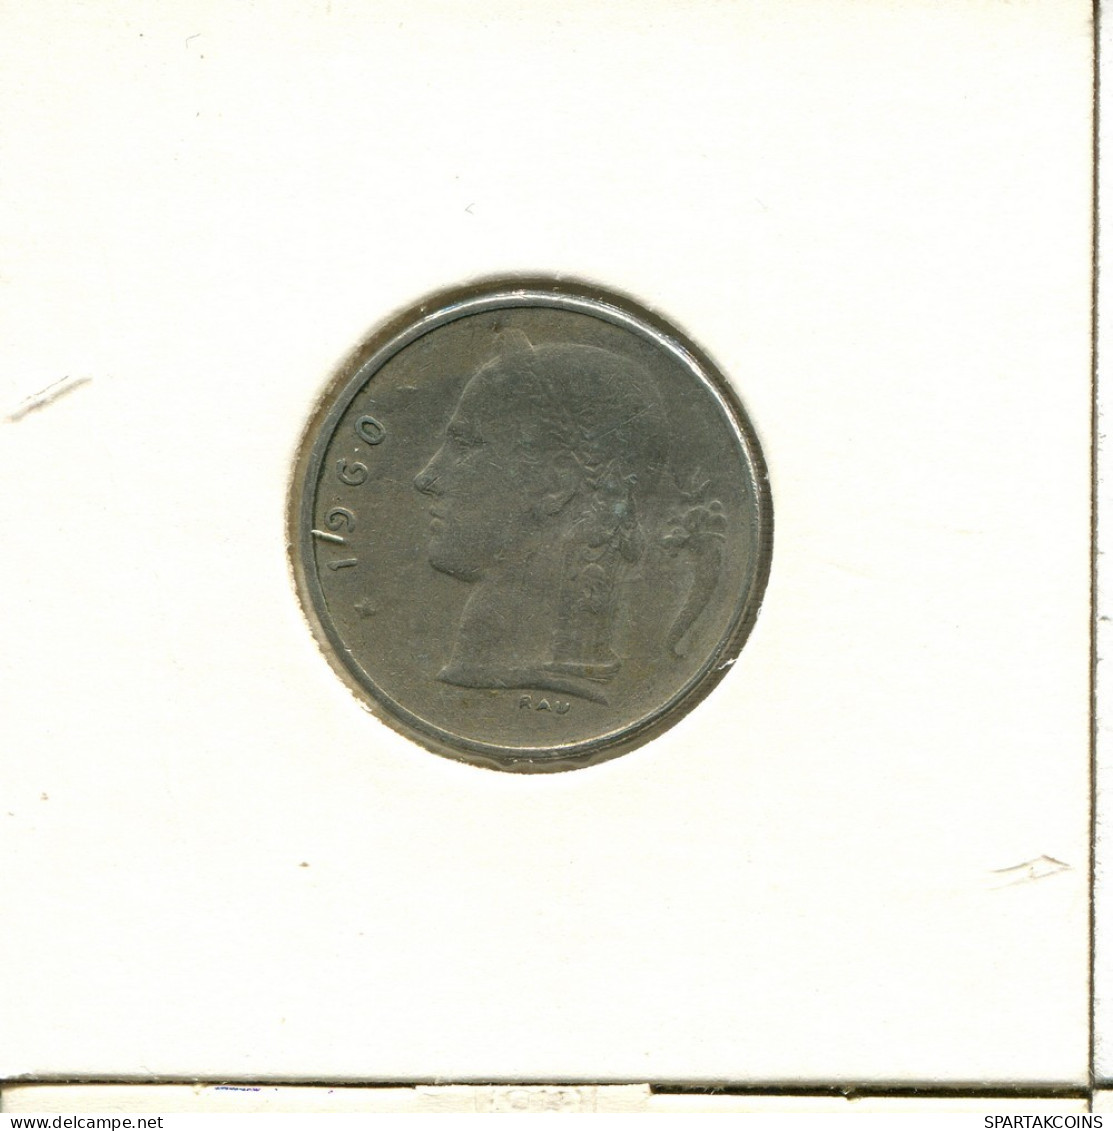 1 FRANC 1960 DUTCH Text BELGIEN BELGIUM Münze #AU001.D.A - 1 Franc